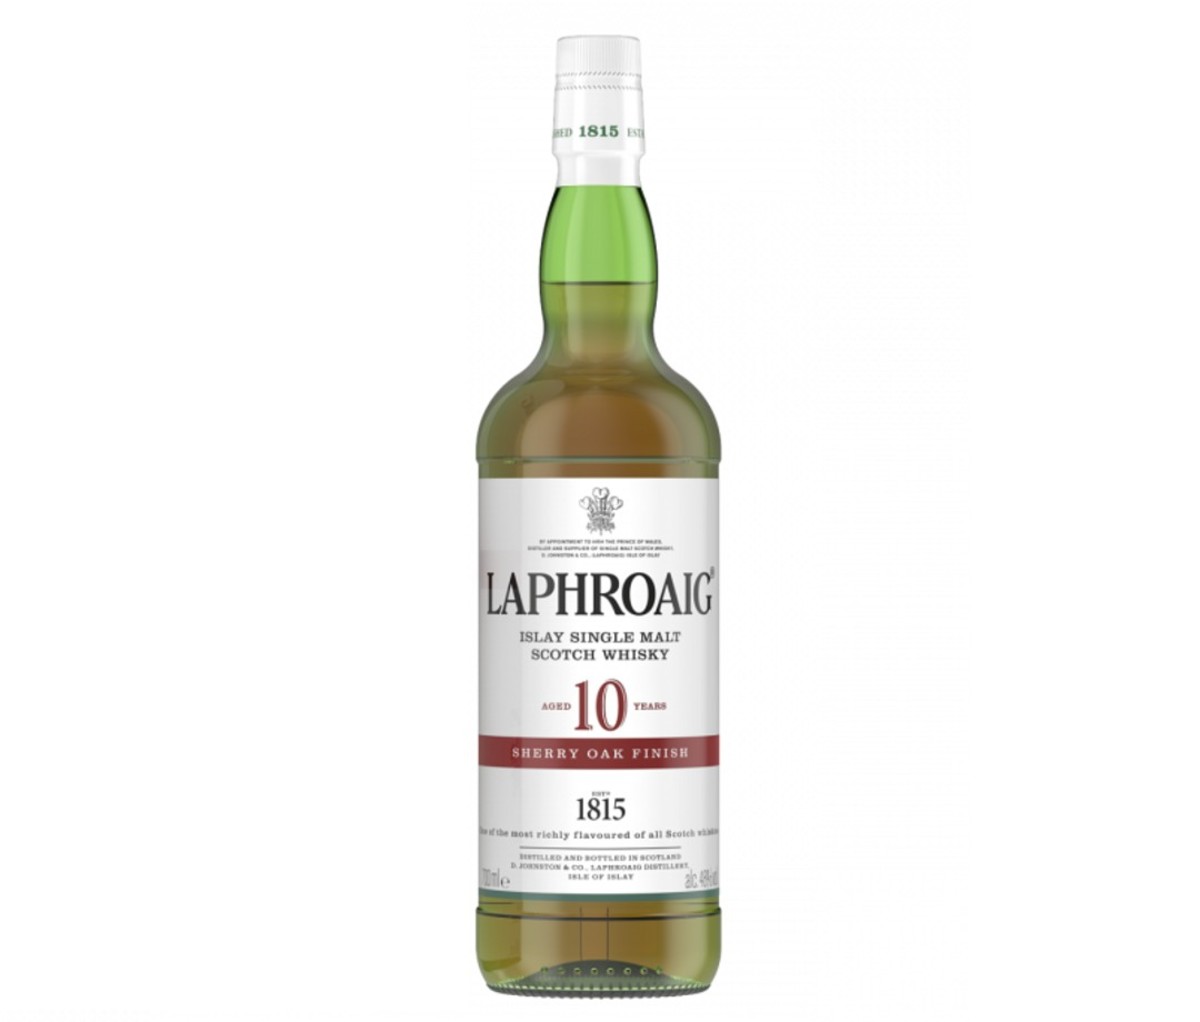 A bottle of Laphroaig 10 Year Sherry Oak